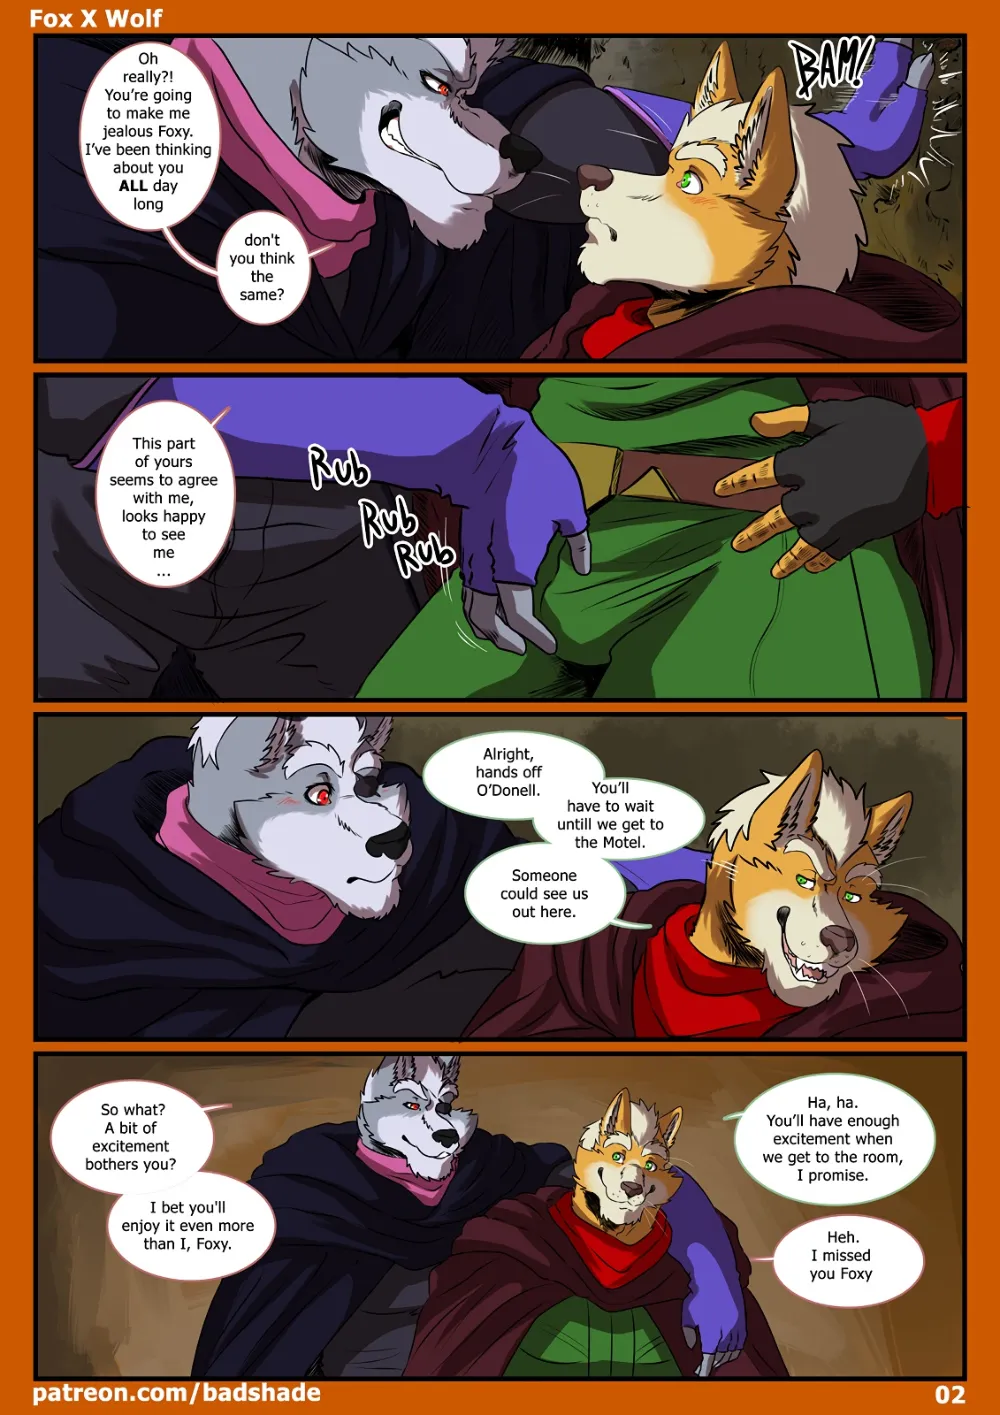 Fox X Wolf - Page 2